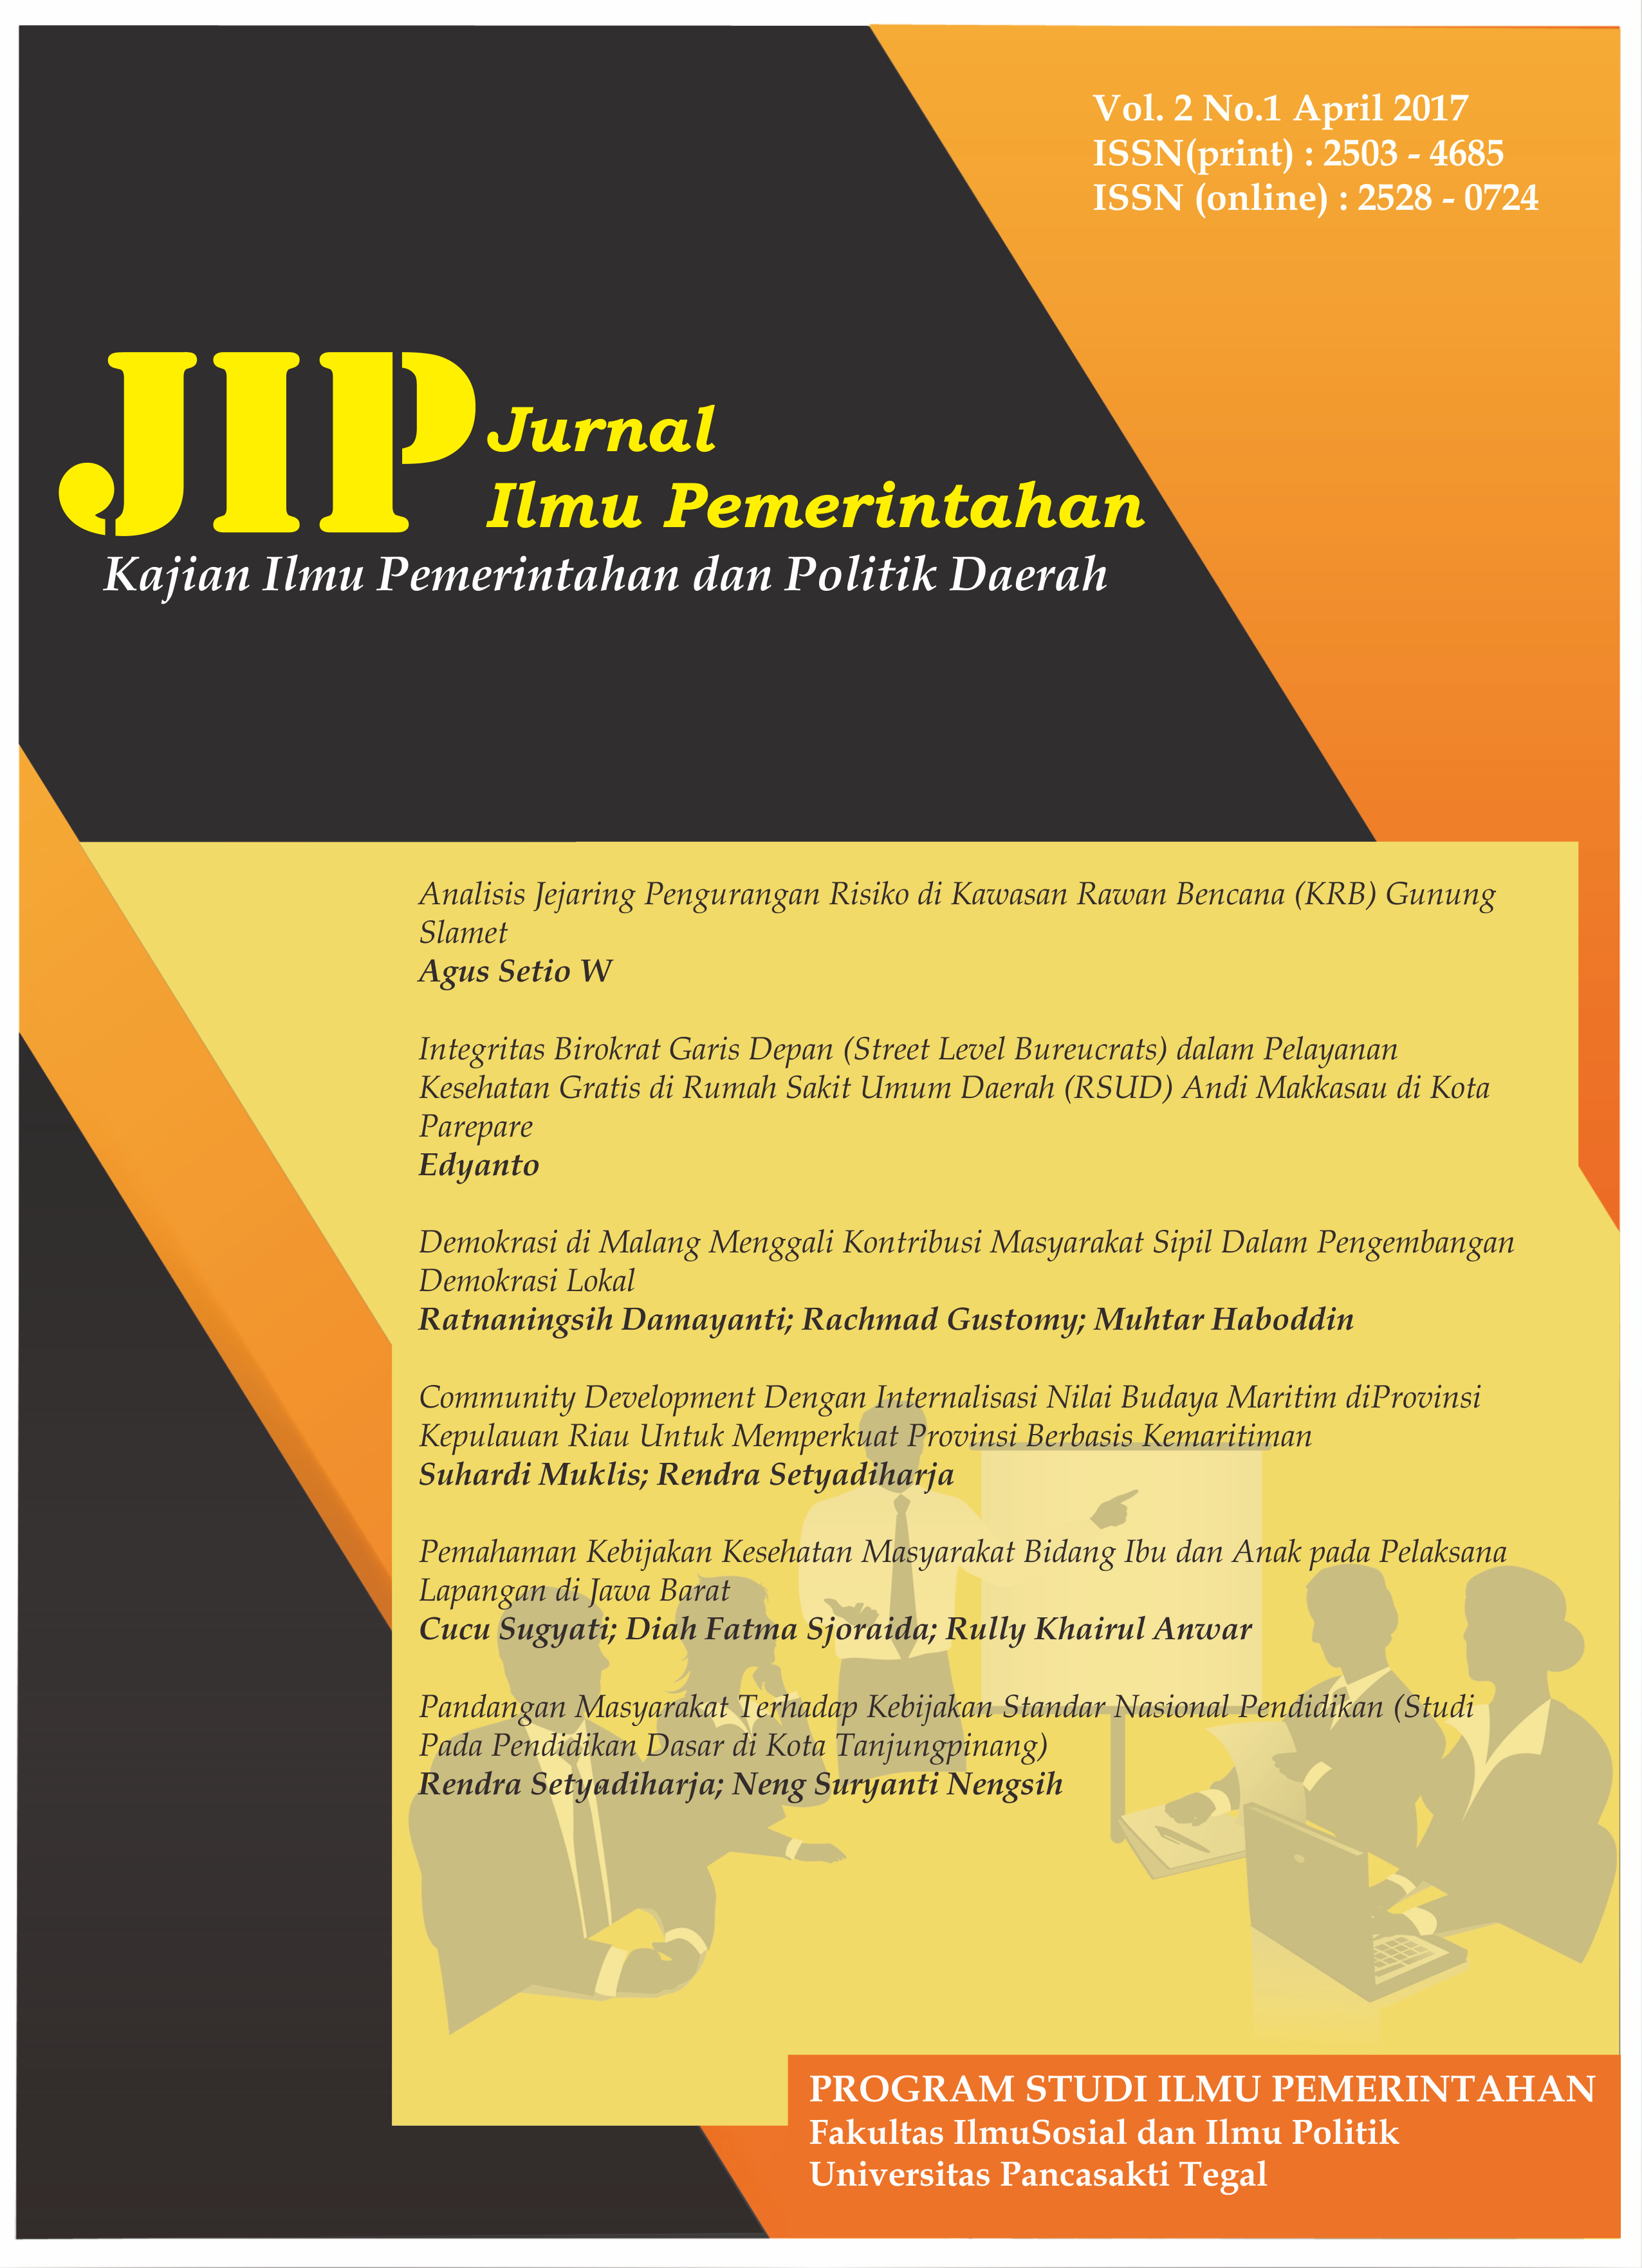 Vol 2 No 1 (2017) JIP (Jurnal Ilmu Pemerintahan